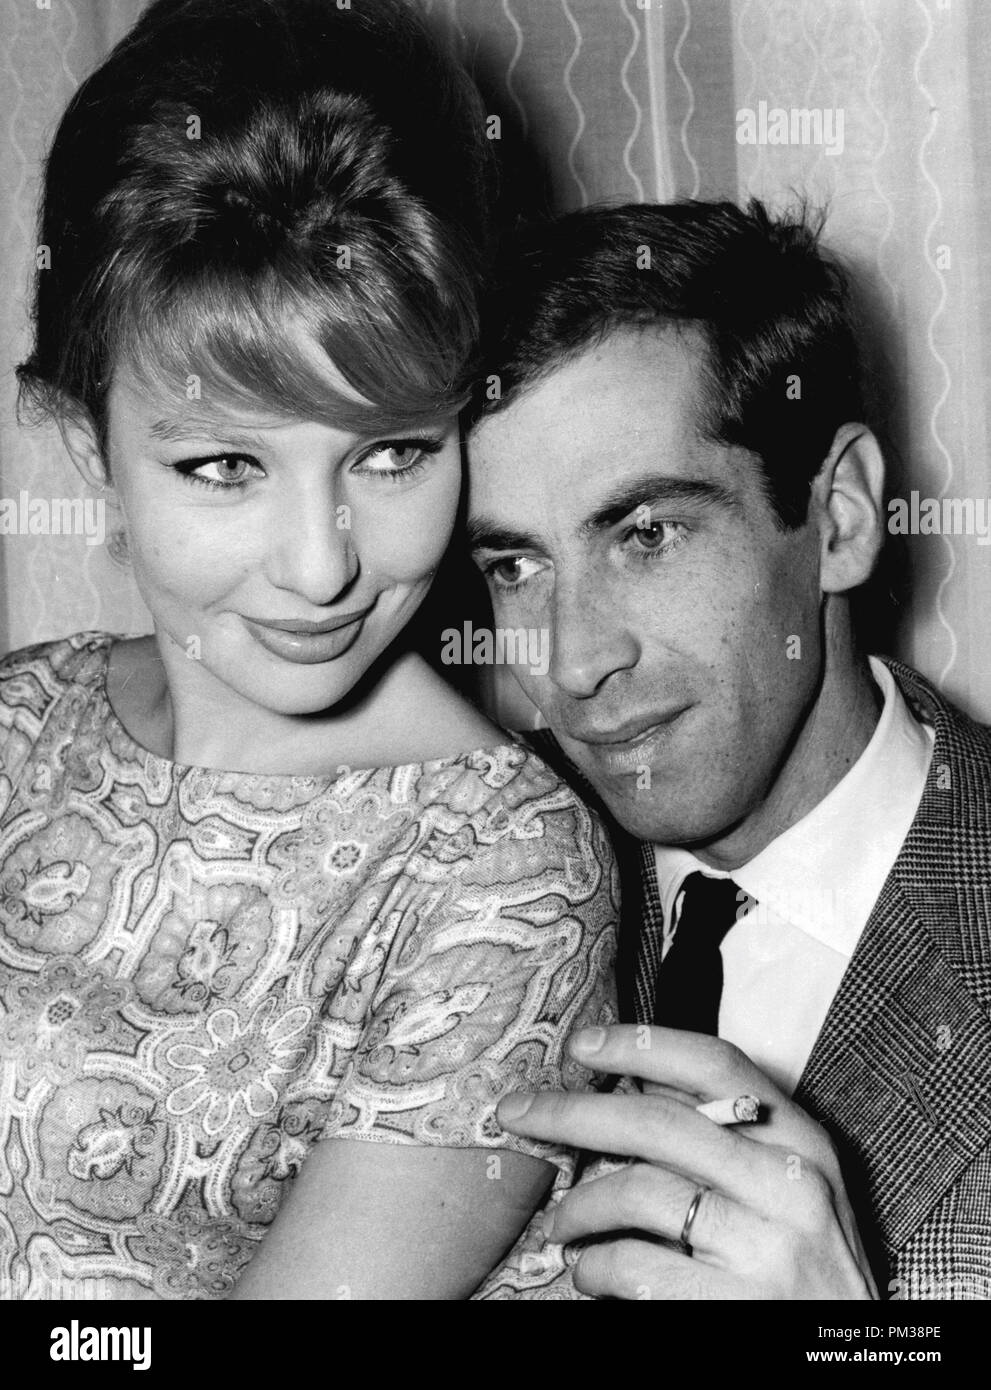 Roger Vadim y su esposa Annette Stroyberg,1958. Archivo de referencia # 1232 002tha Foto de stock